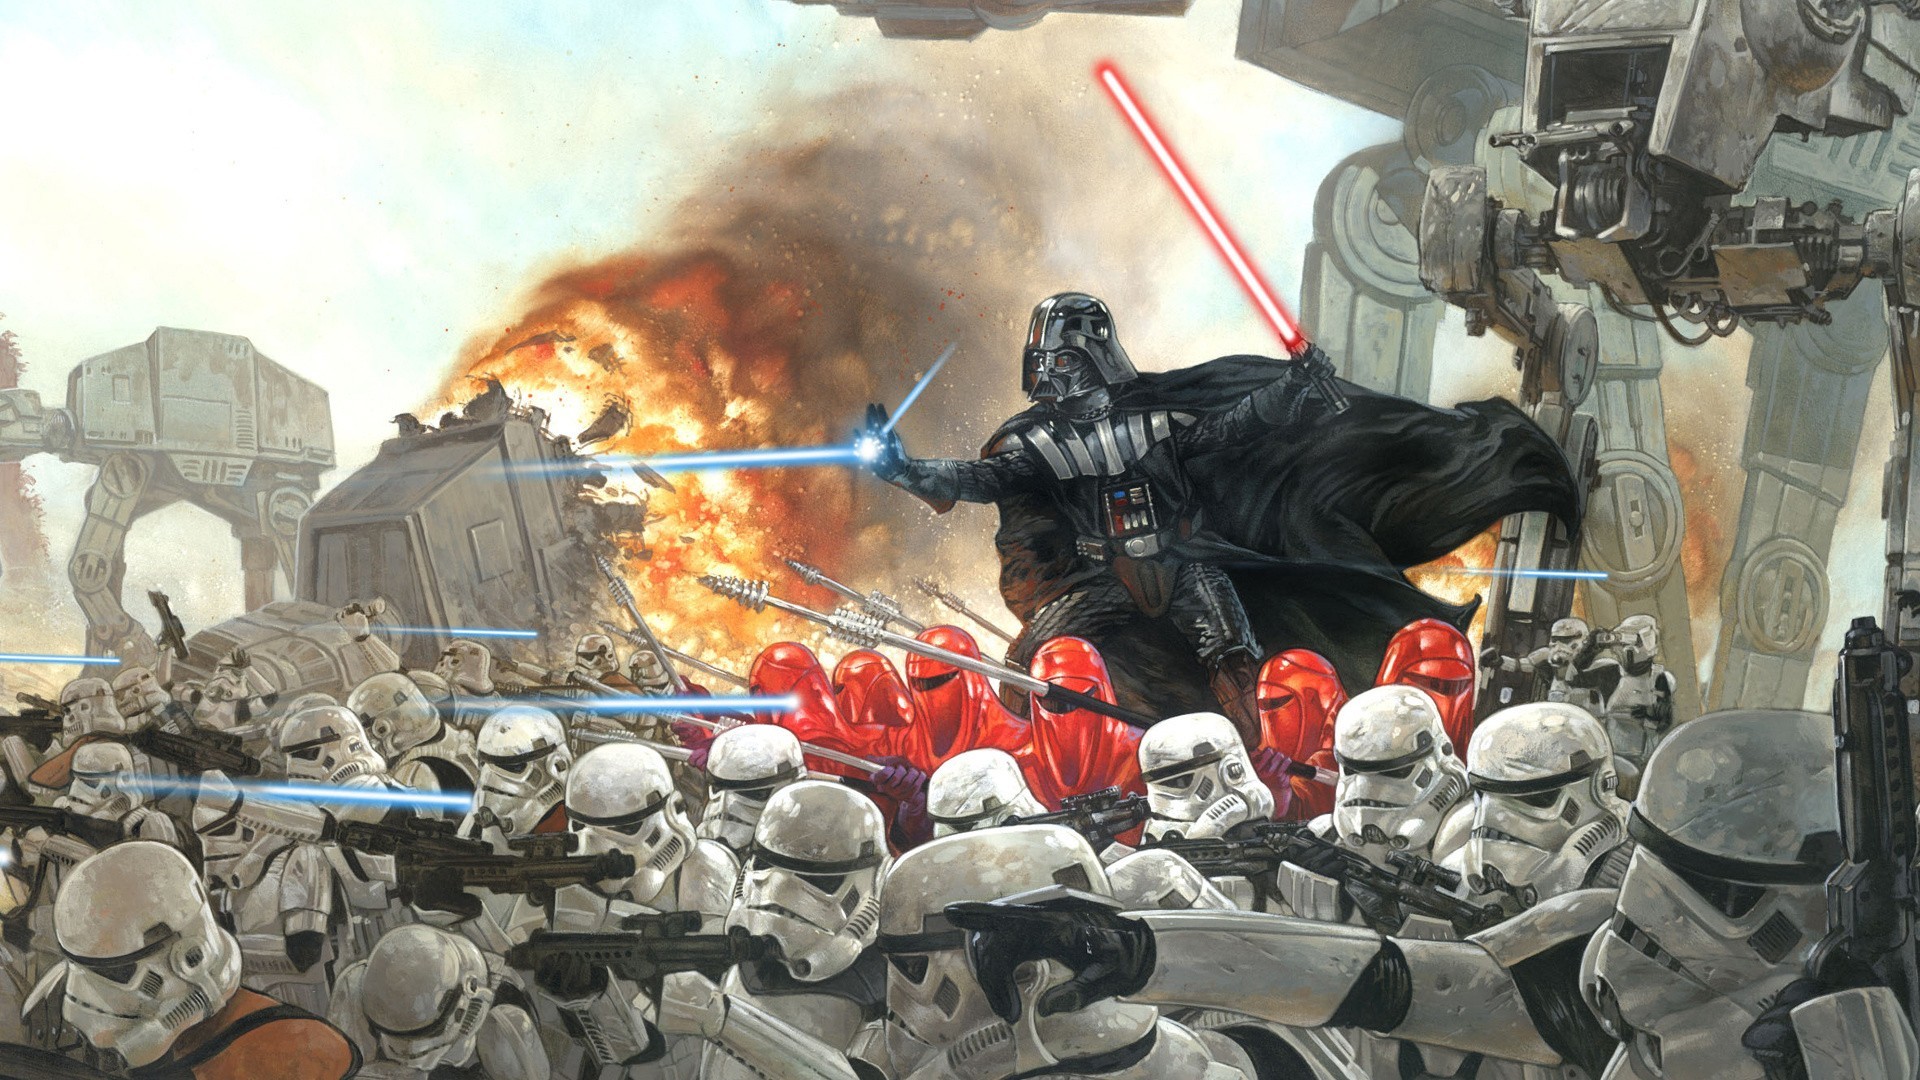 1920x1080 Star Wars stormtroopers Darth Vader dark side wallpaper |  | 54027  | WallpaperUP